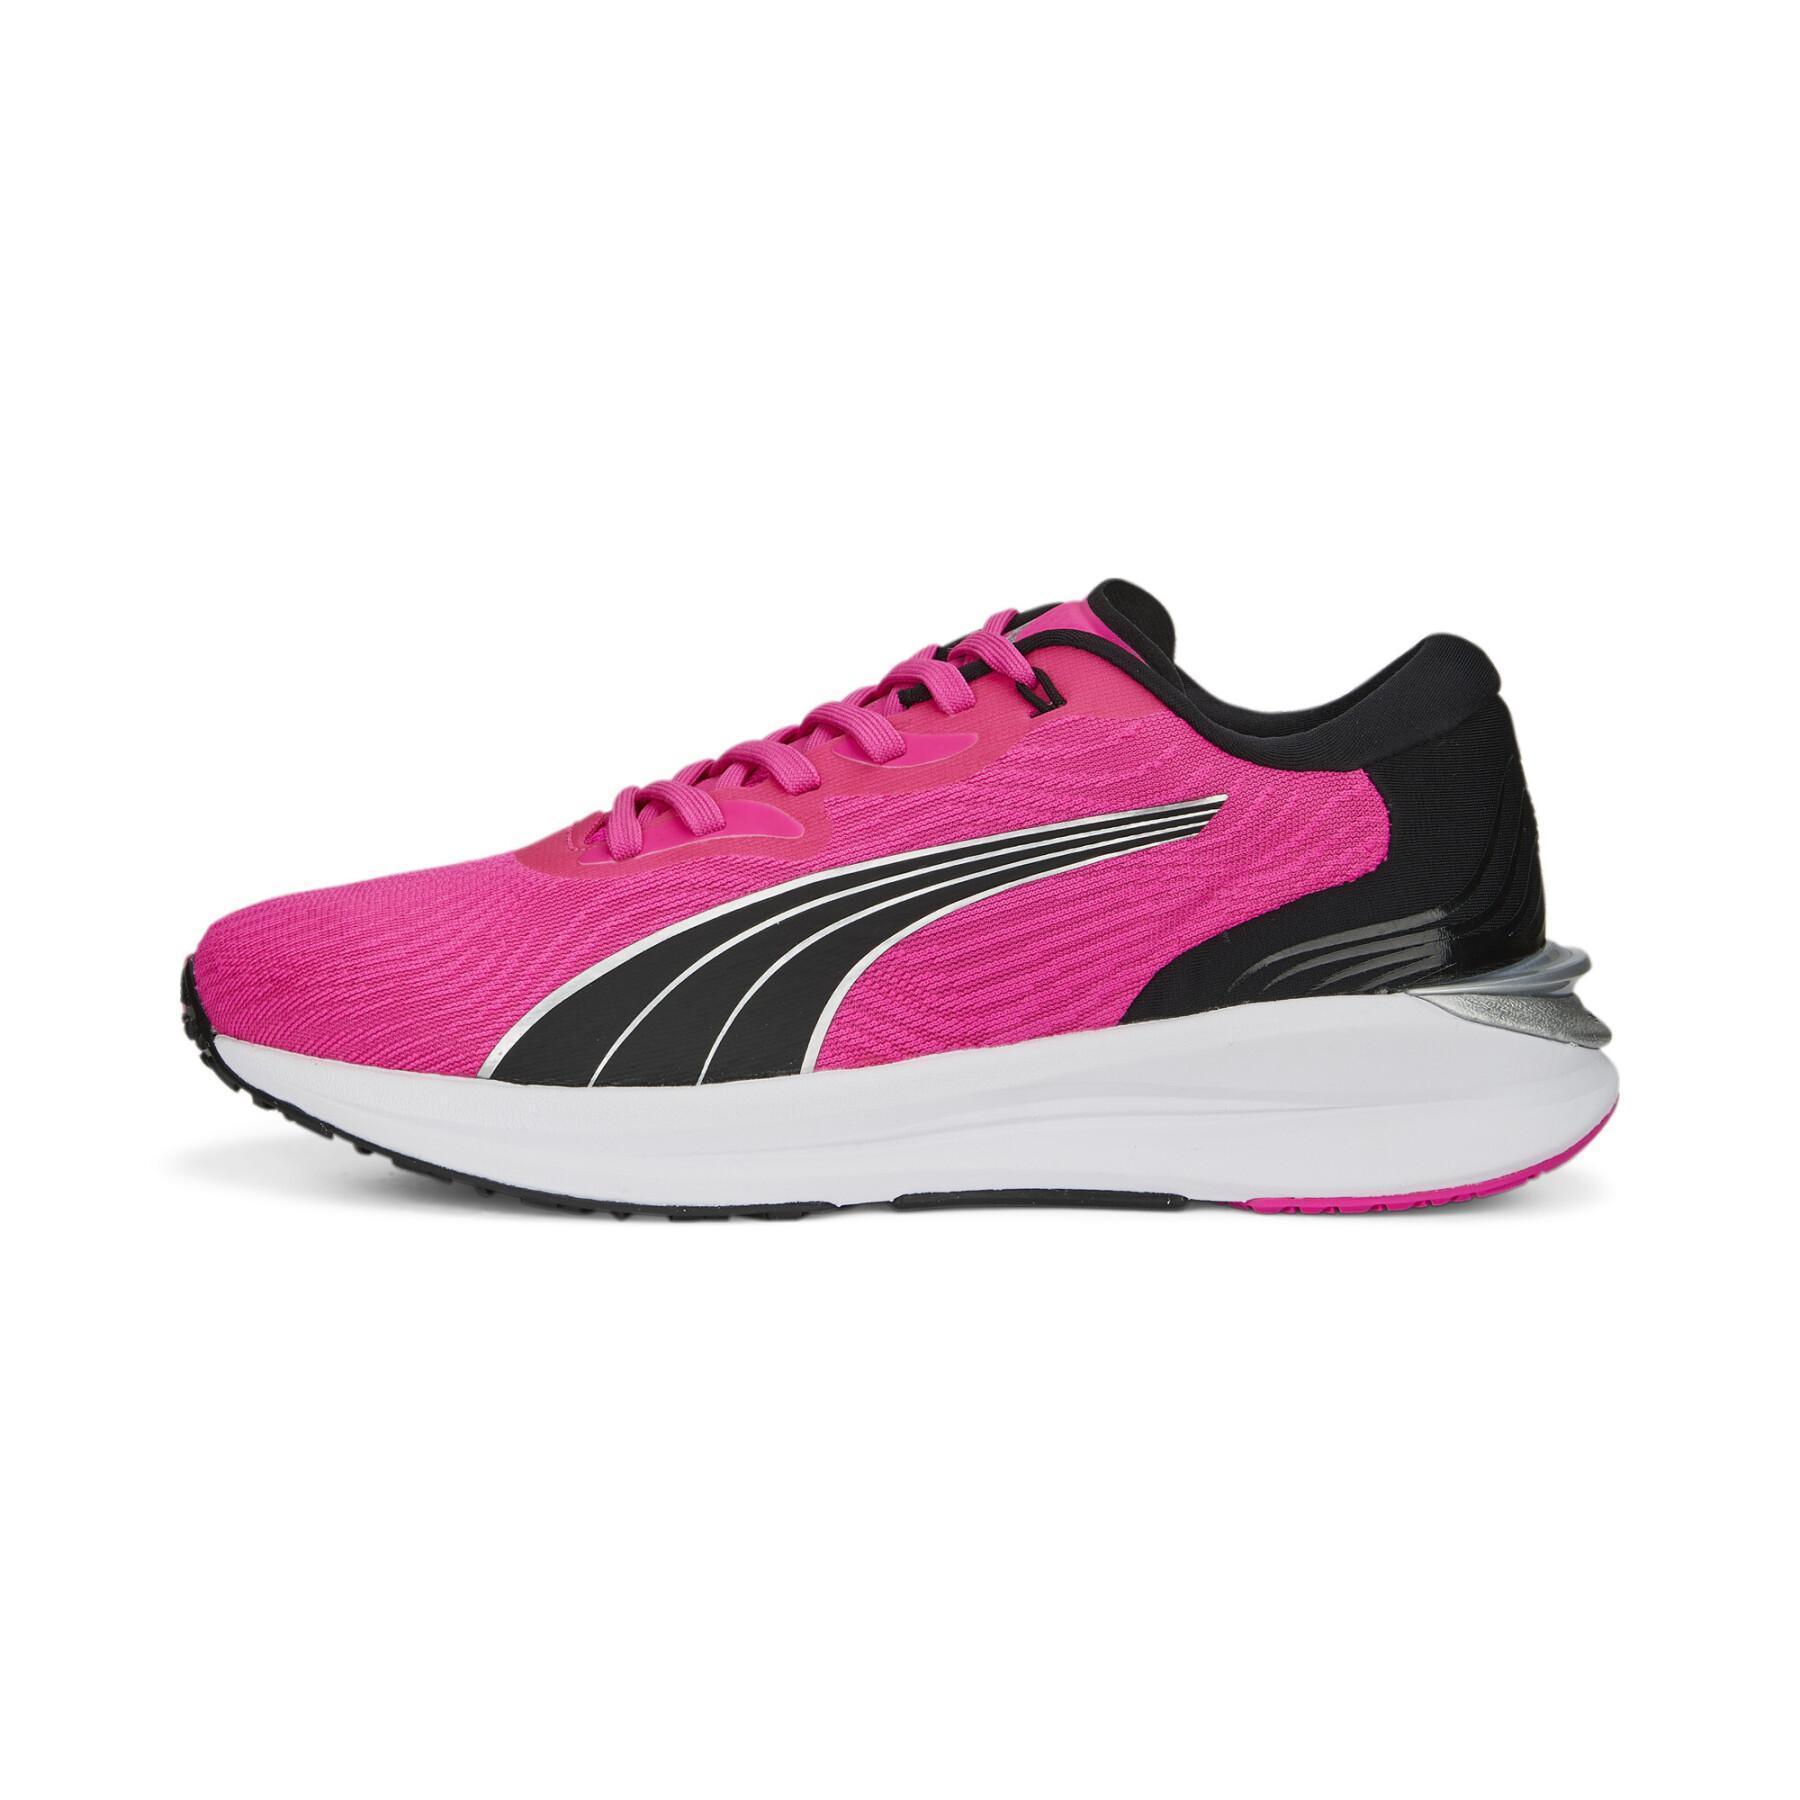 Chaussures de running femme Puma Electrify Nitro 2 - Puma - Femme -  Entretien physique